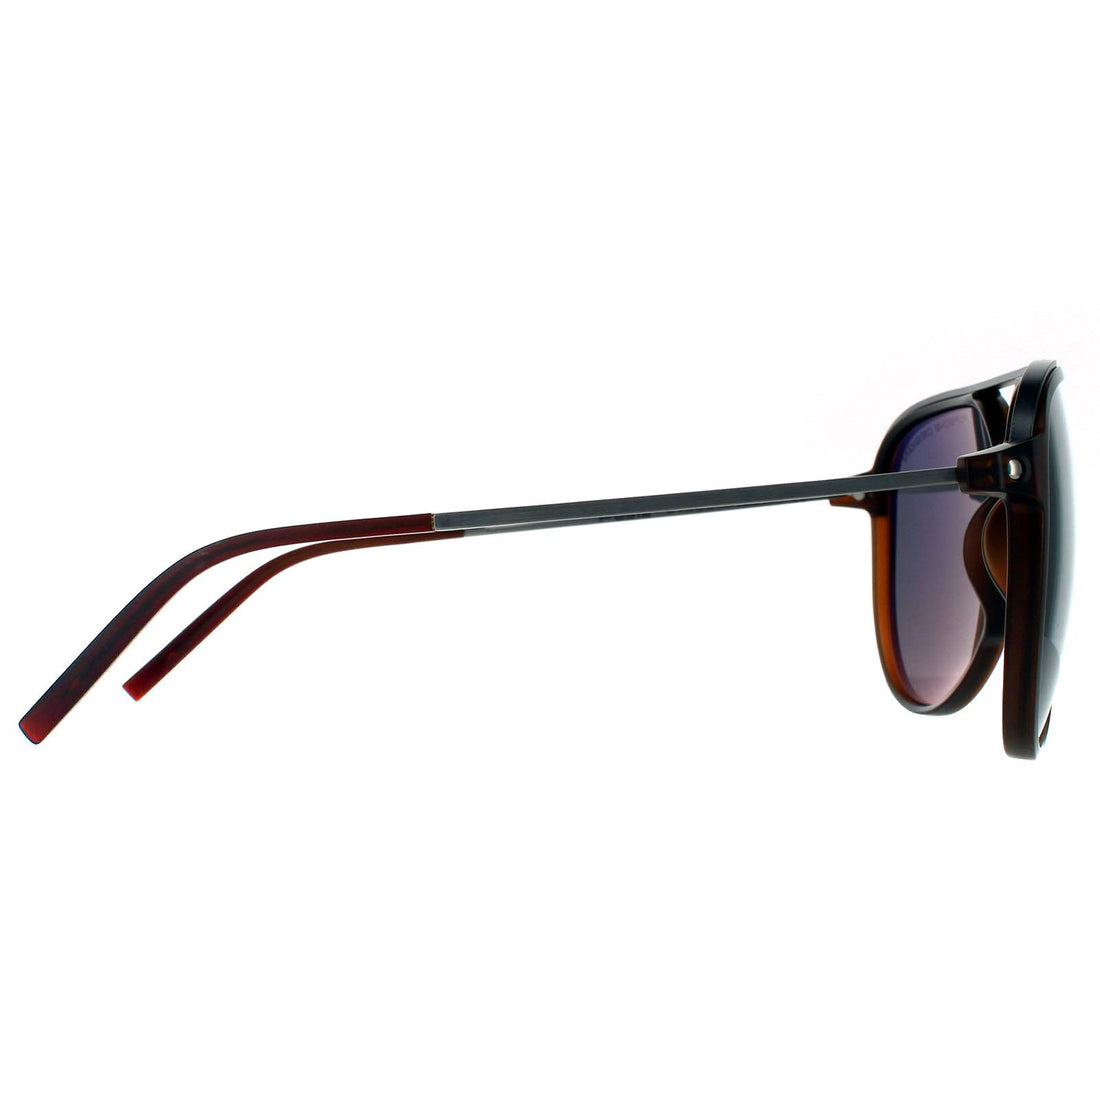 Porsche Design Sunglasses P8912 B Brown Grey Grey Polarized AR